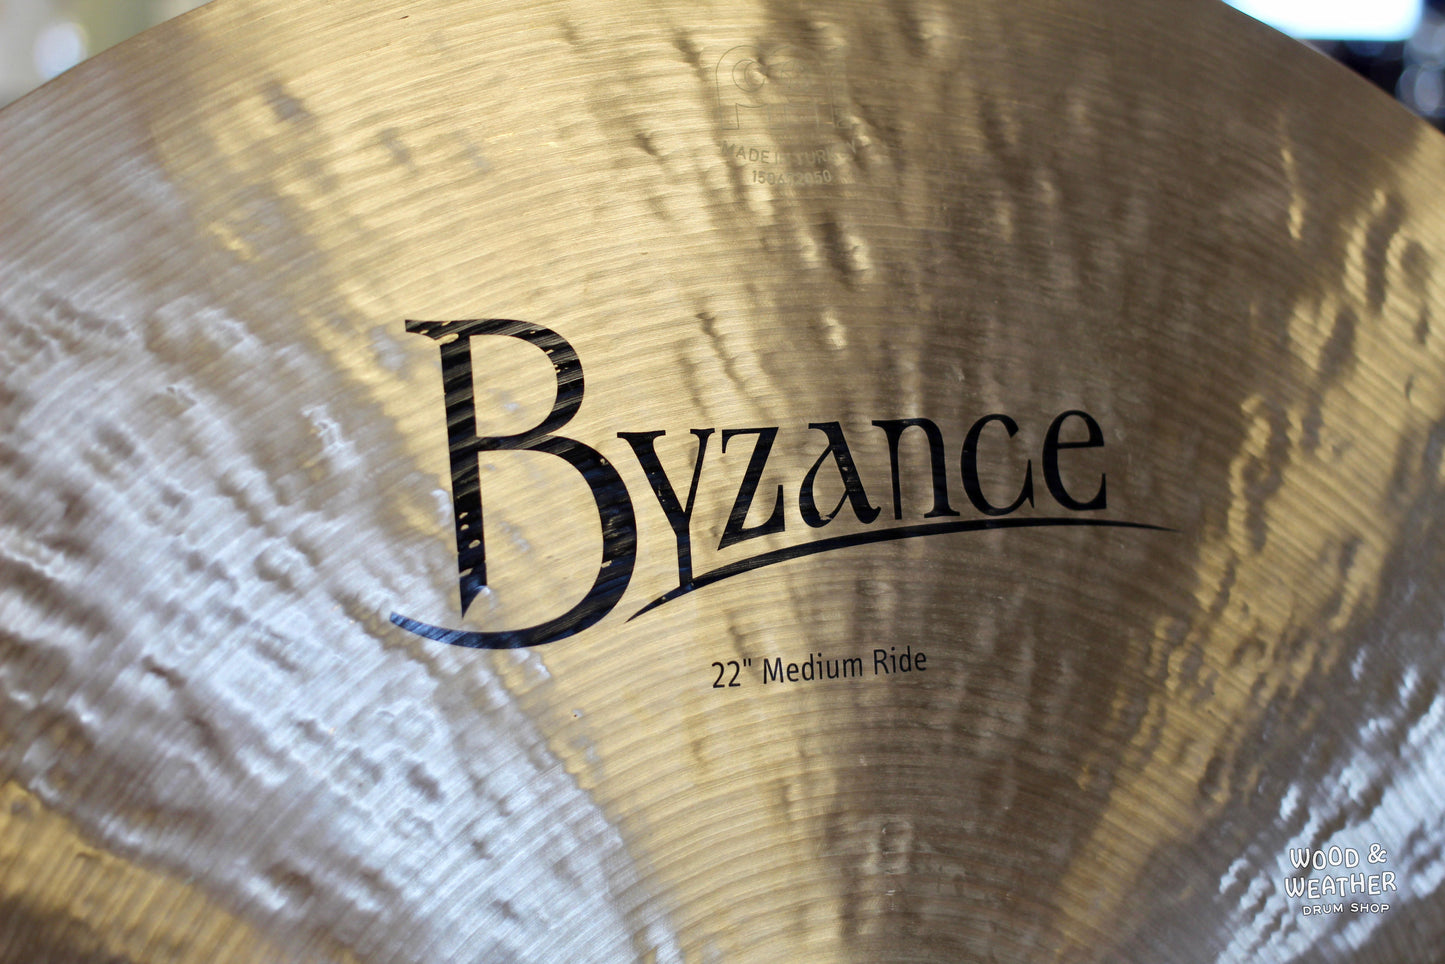 Used Meinl Cymbals 22" Byzance Medium Ride Cymbal 3030g